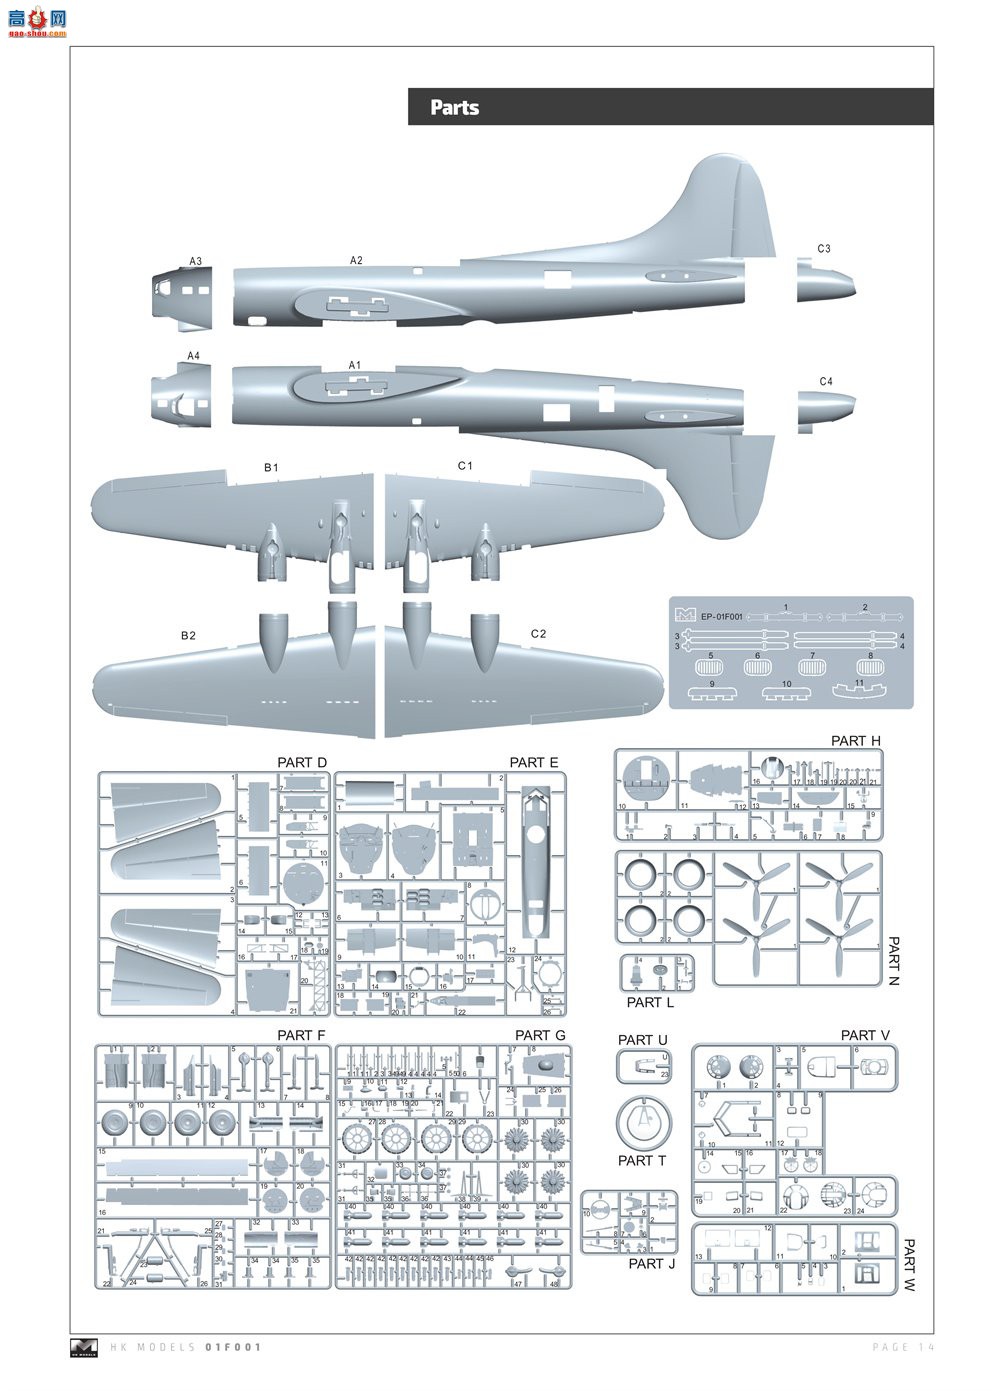 HK ը 01F001 B-17Gб